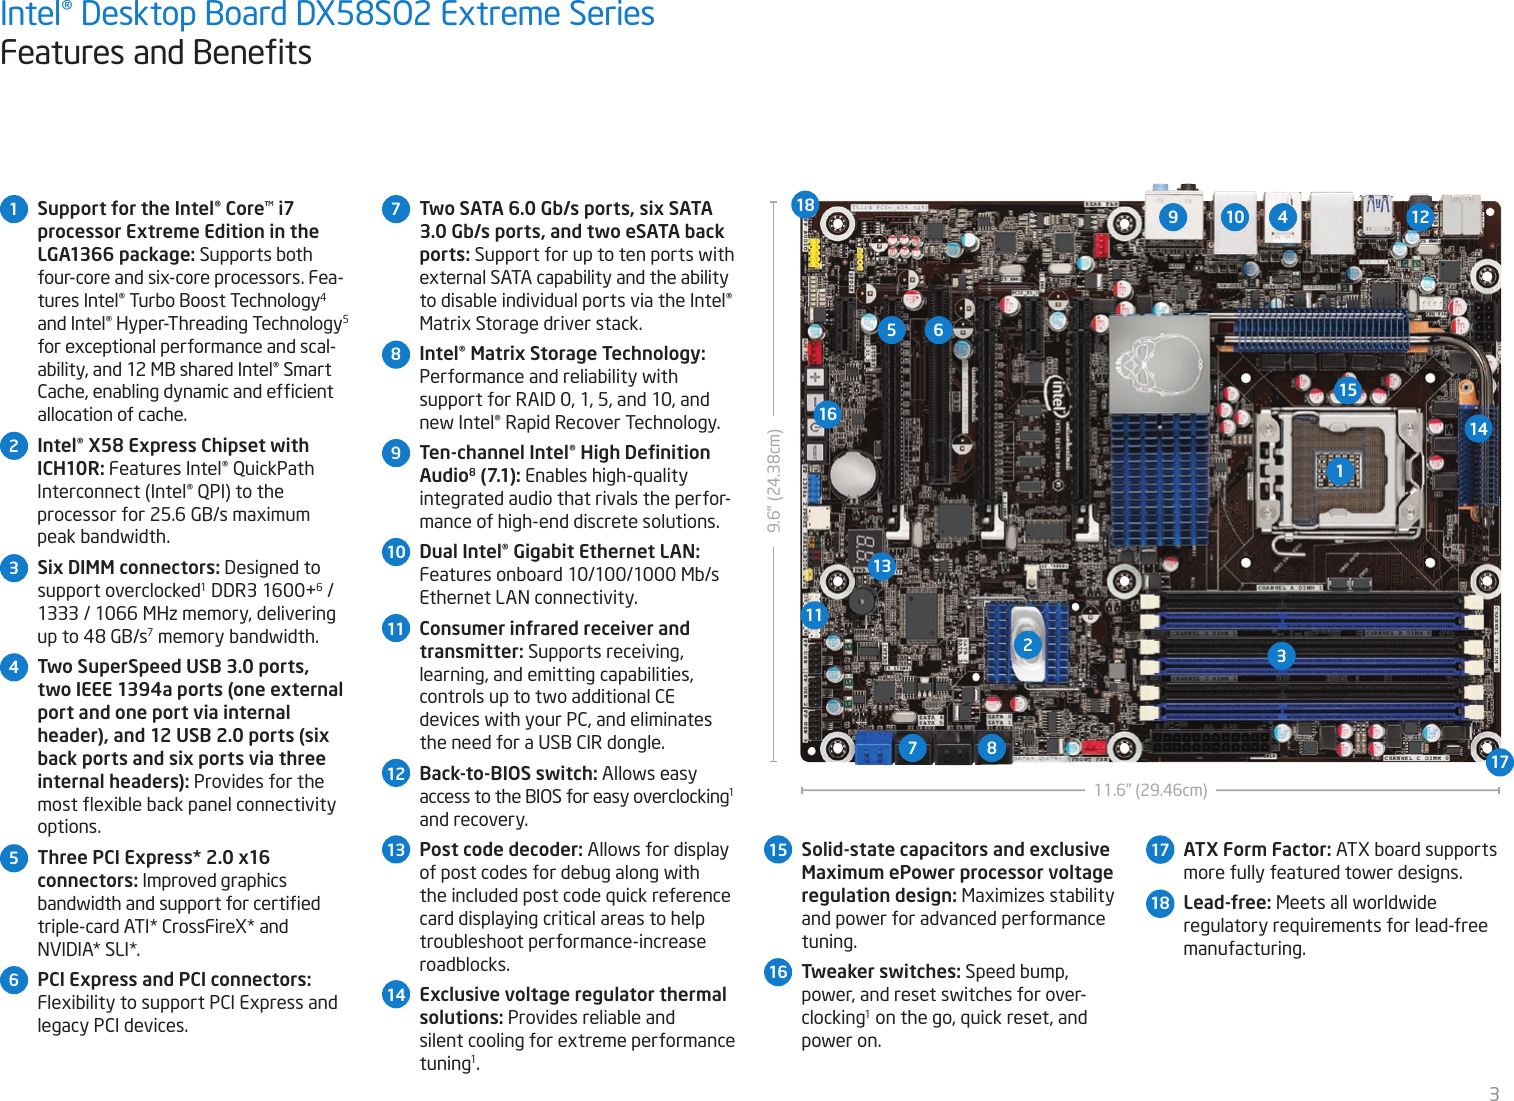 Page 3 of 4 - Intel Intel-Intel-Extreme-Desktop-Motherboard-Blkdx58So2-Users-Manual- Intel(R) Desktop Board - DX58SO2 Extreme Series  Intel-intel-extreme-desktop-motherboard-blkdx58so2-users-manual